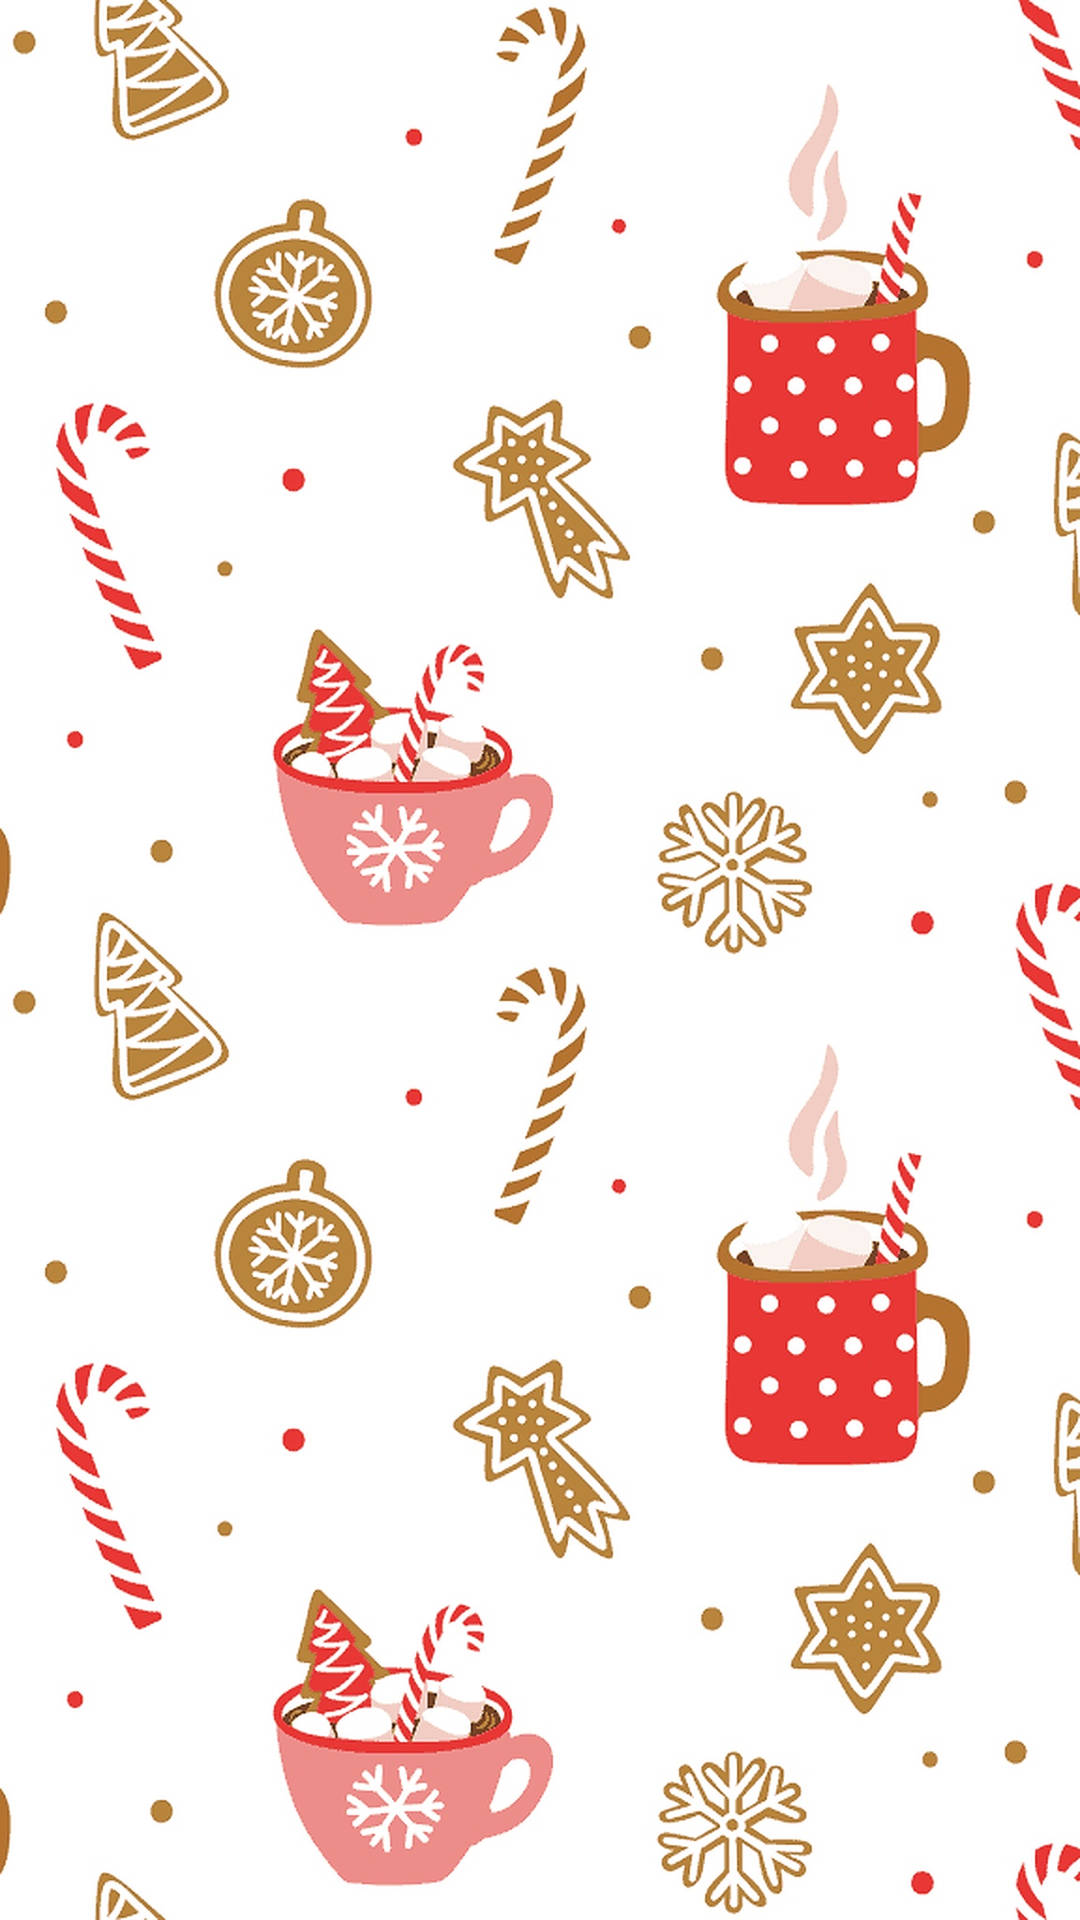 Delightful Christmas Aesthetics - An Adorable Display Of Festive Cheer Background